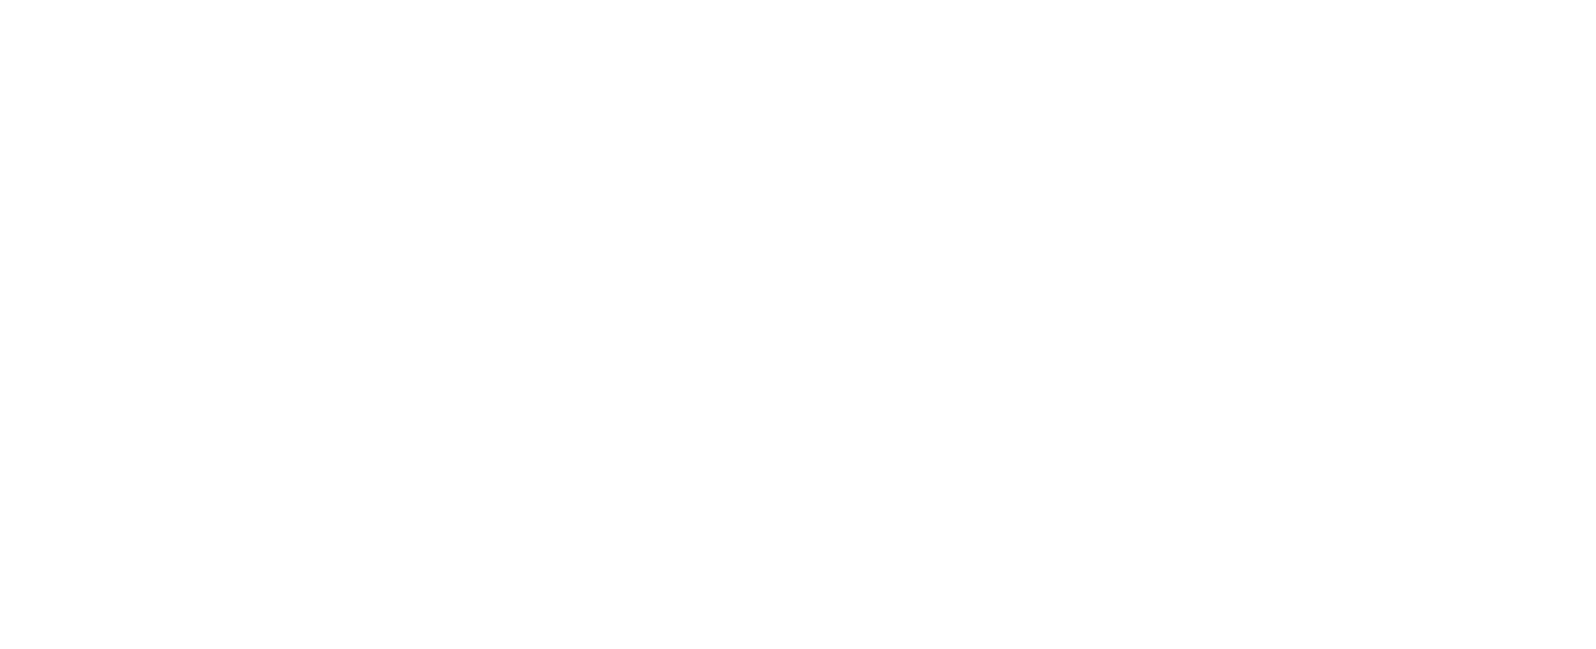 The Arena Group Logo groß für dunkle Hintergründe (transparentes PNG)